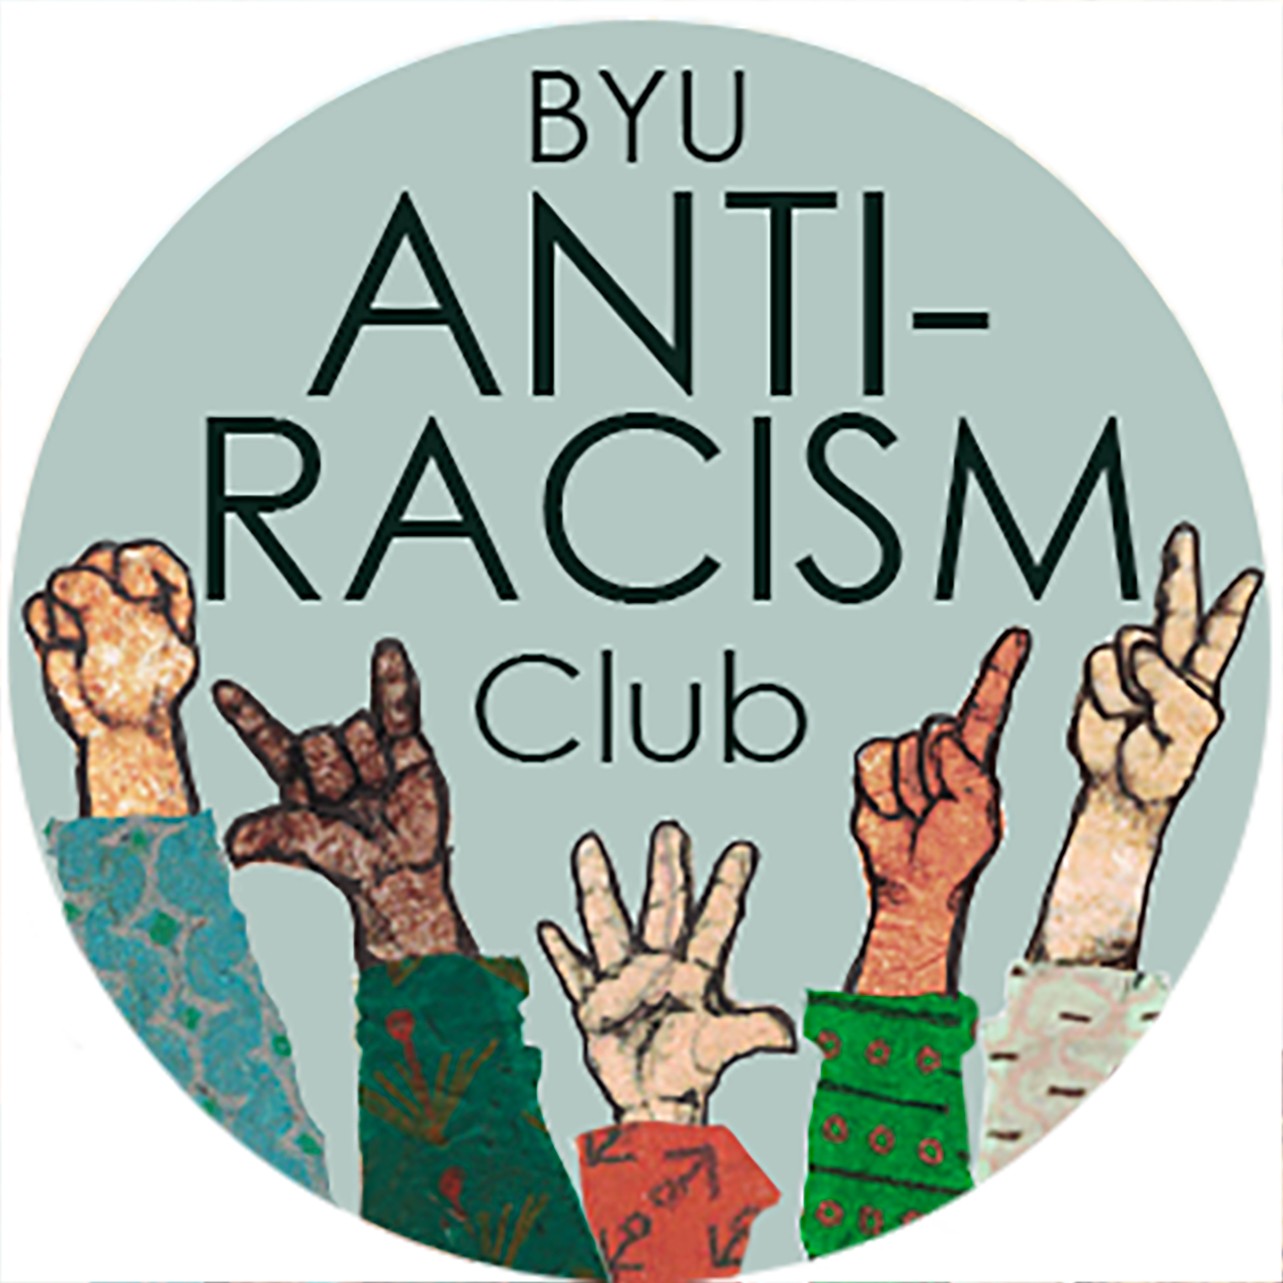 Christlike Love Motivates Byu Anti Racism Club The Daily Universe